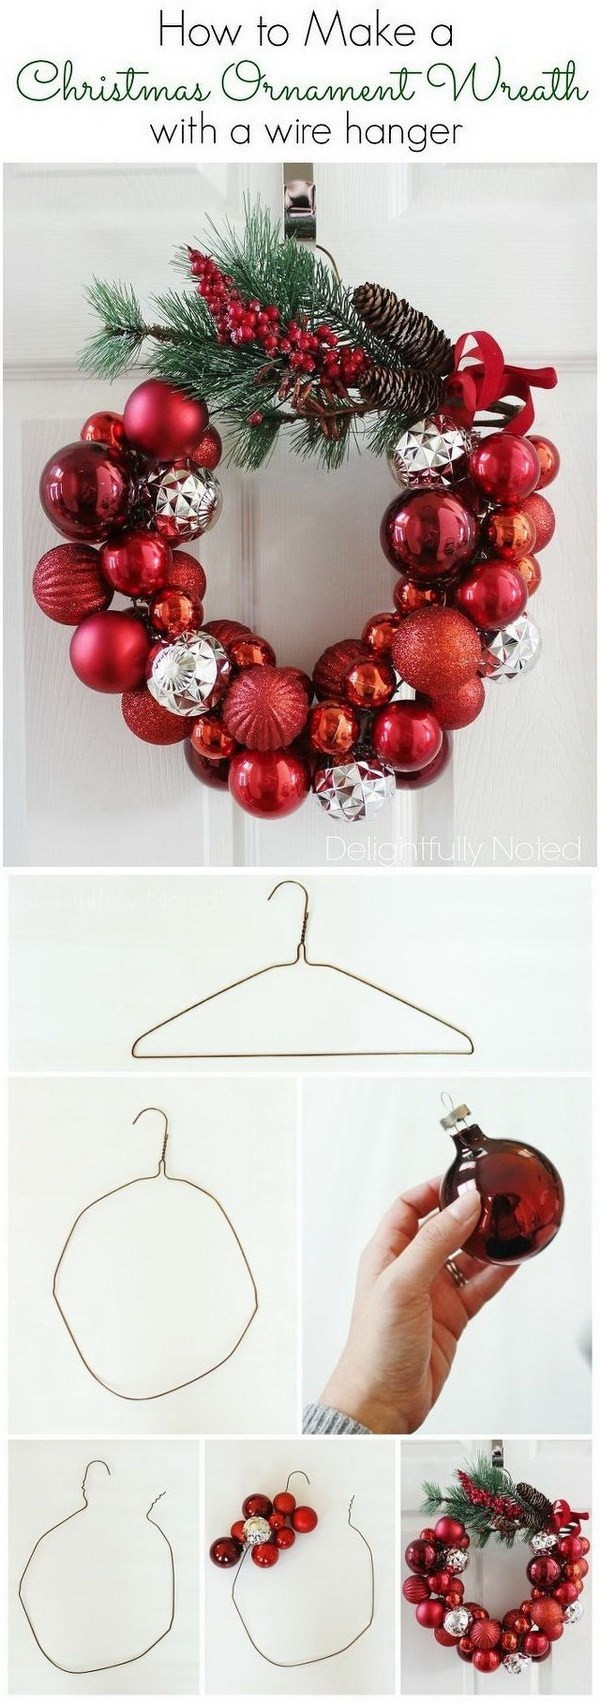 Best ideas about DIY Christmas Decorations Ideas
. Save or Pin 35 DIY Christmas Decoration Ideas For Creative Juice Now.